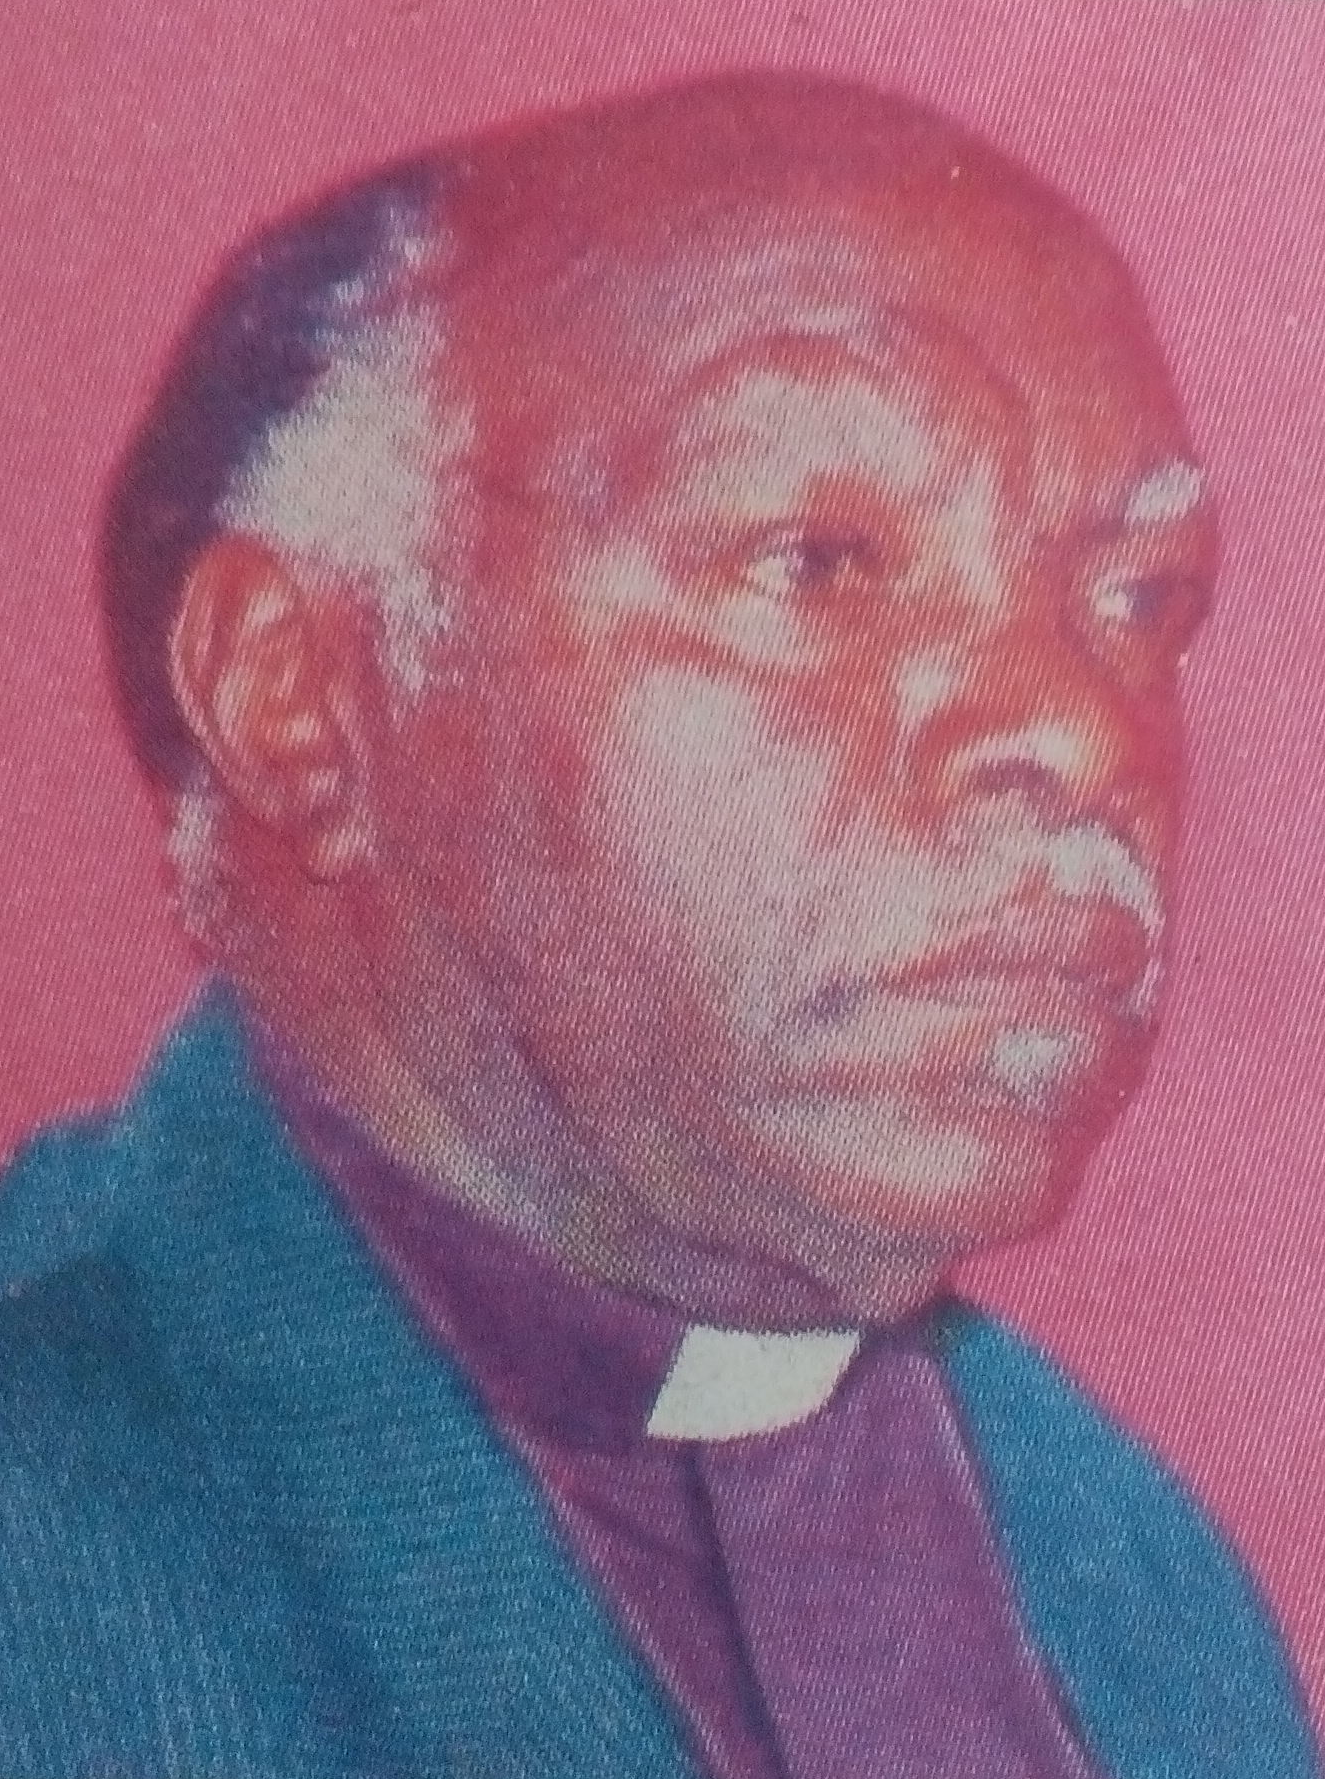 Obituary Image of Arch Bishop Charles Wainaina F. Mungai